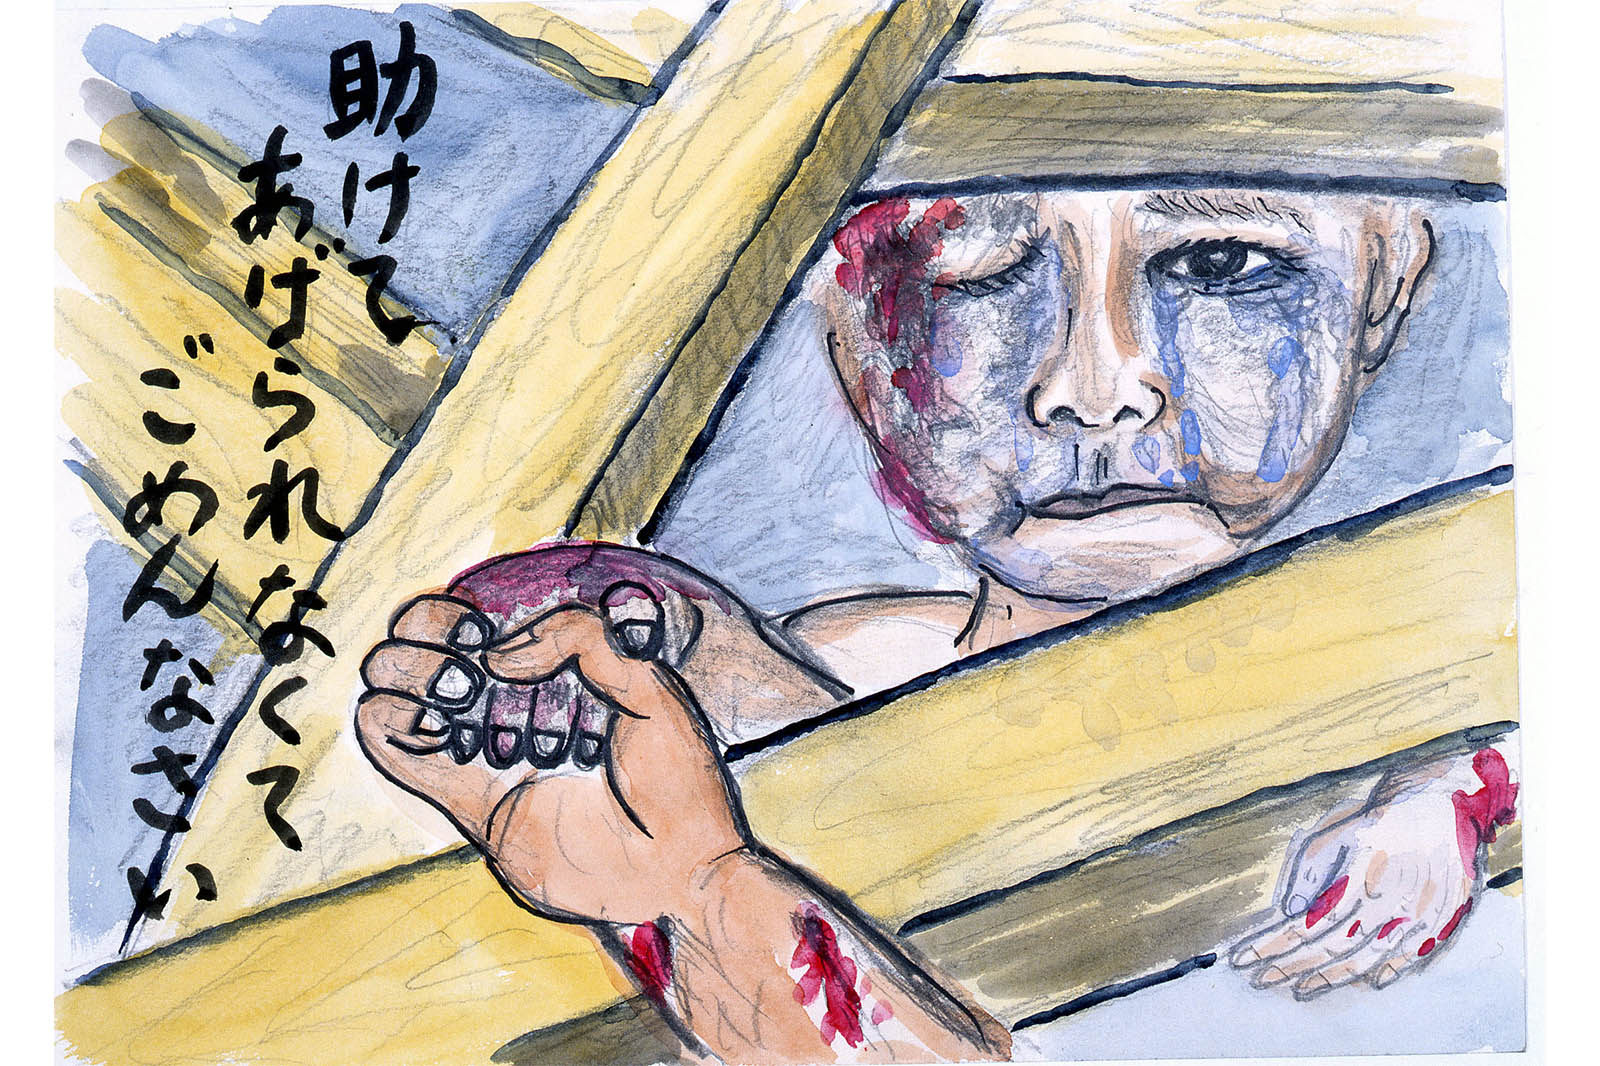 تم رسمها من قبل كاطو يوشينوري. (Drawn by Yoshinori Kato, Collection of the Hiroshima Peace Memorial Museum)